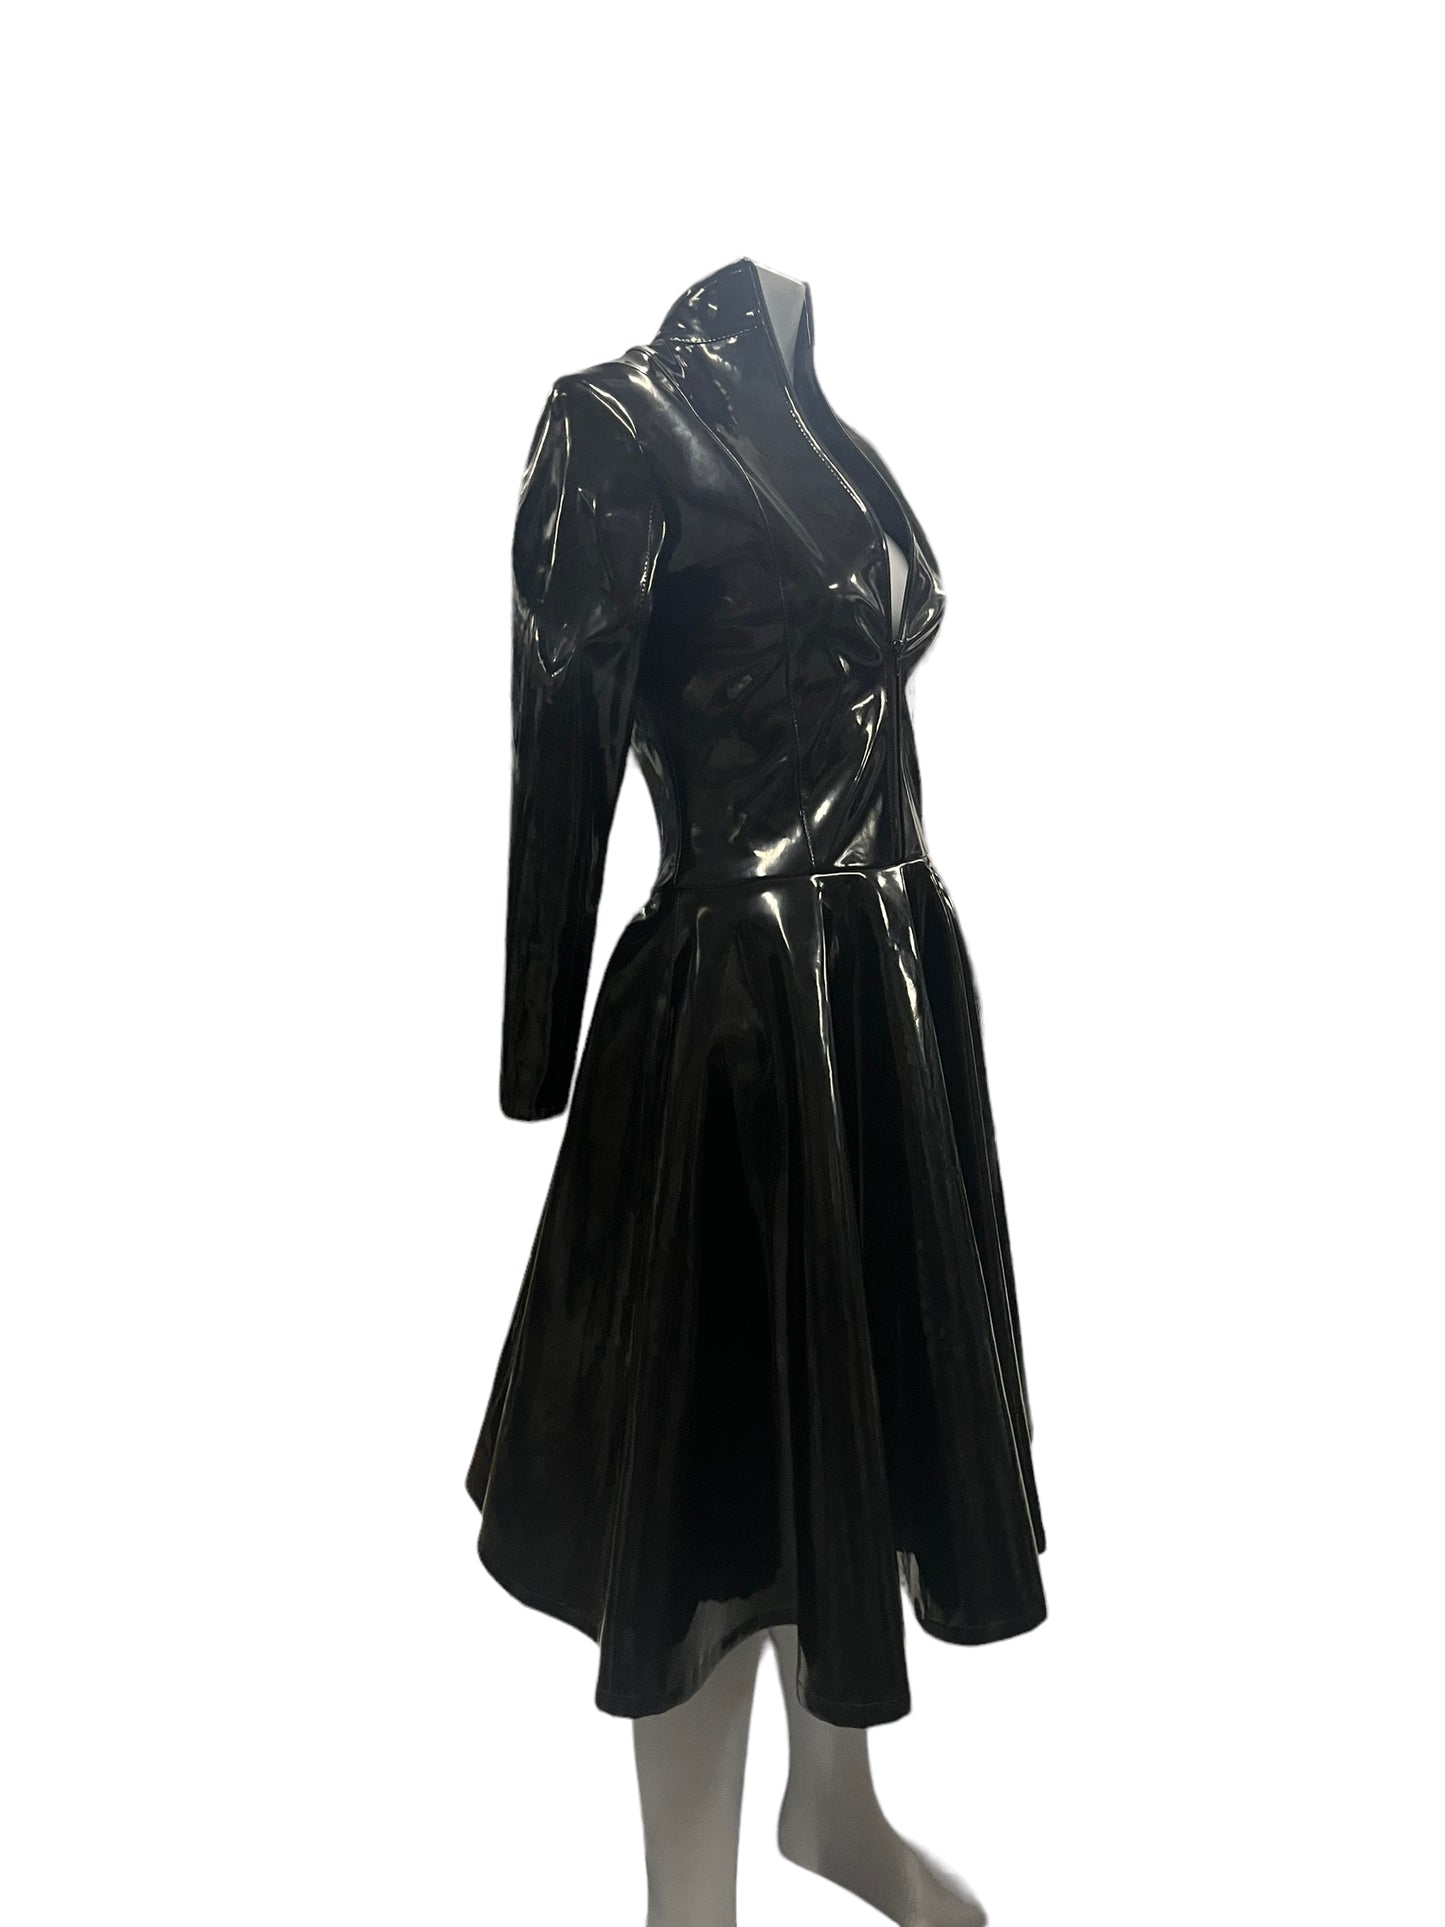 Fashion World - LL65 - Black Dress with Zipper - Size S